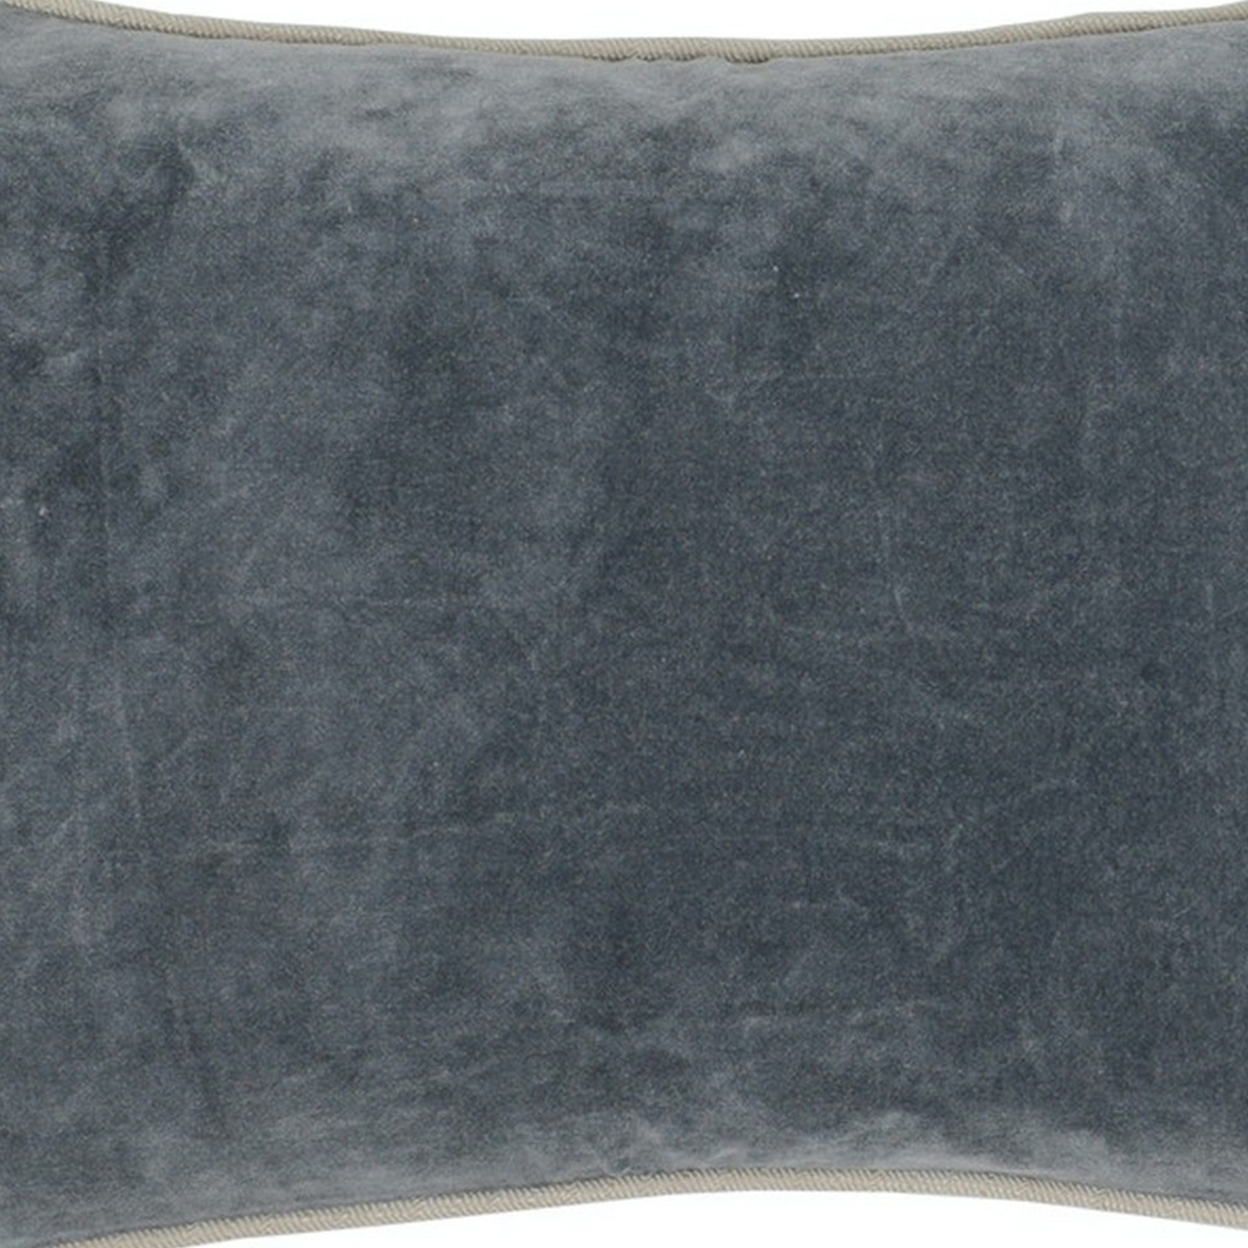 Rectangular Throw Pillow With Cotton Cover, Gray- Saltoro Sherpi